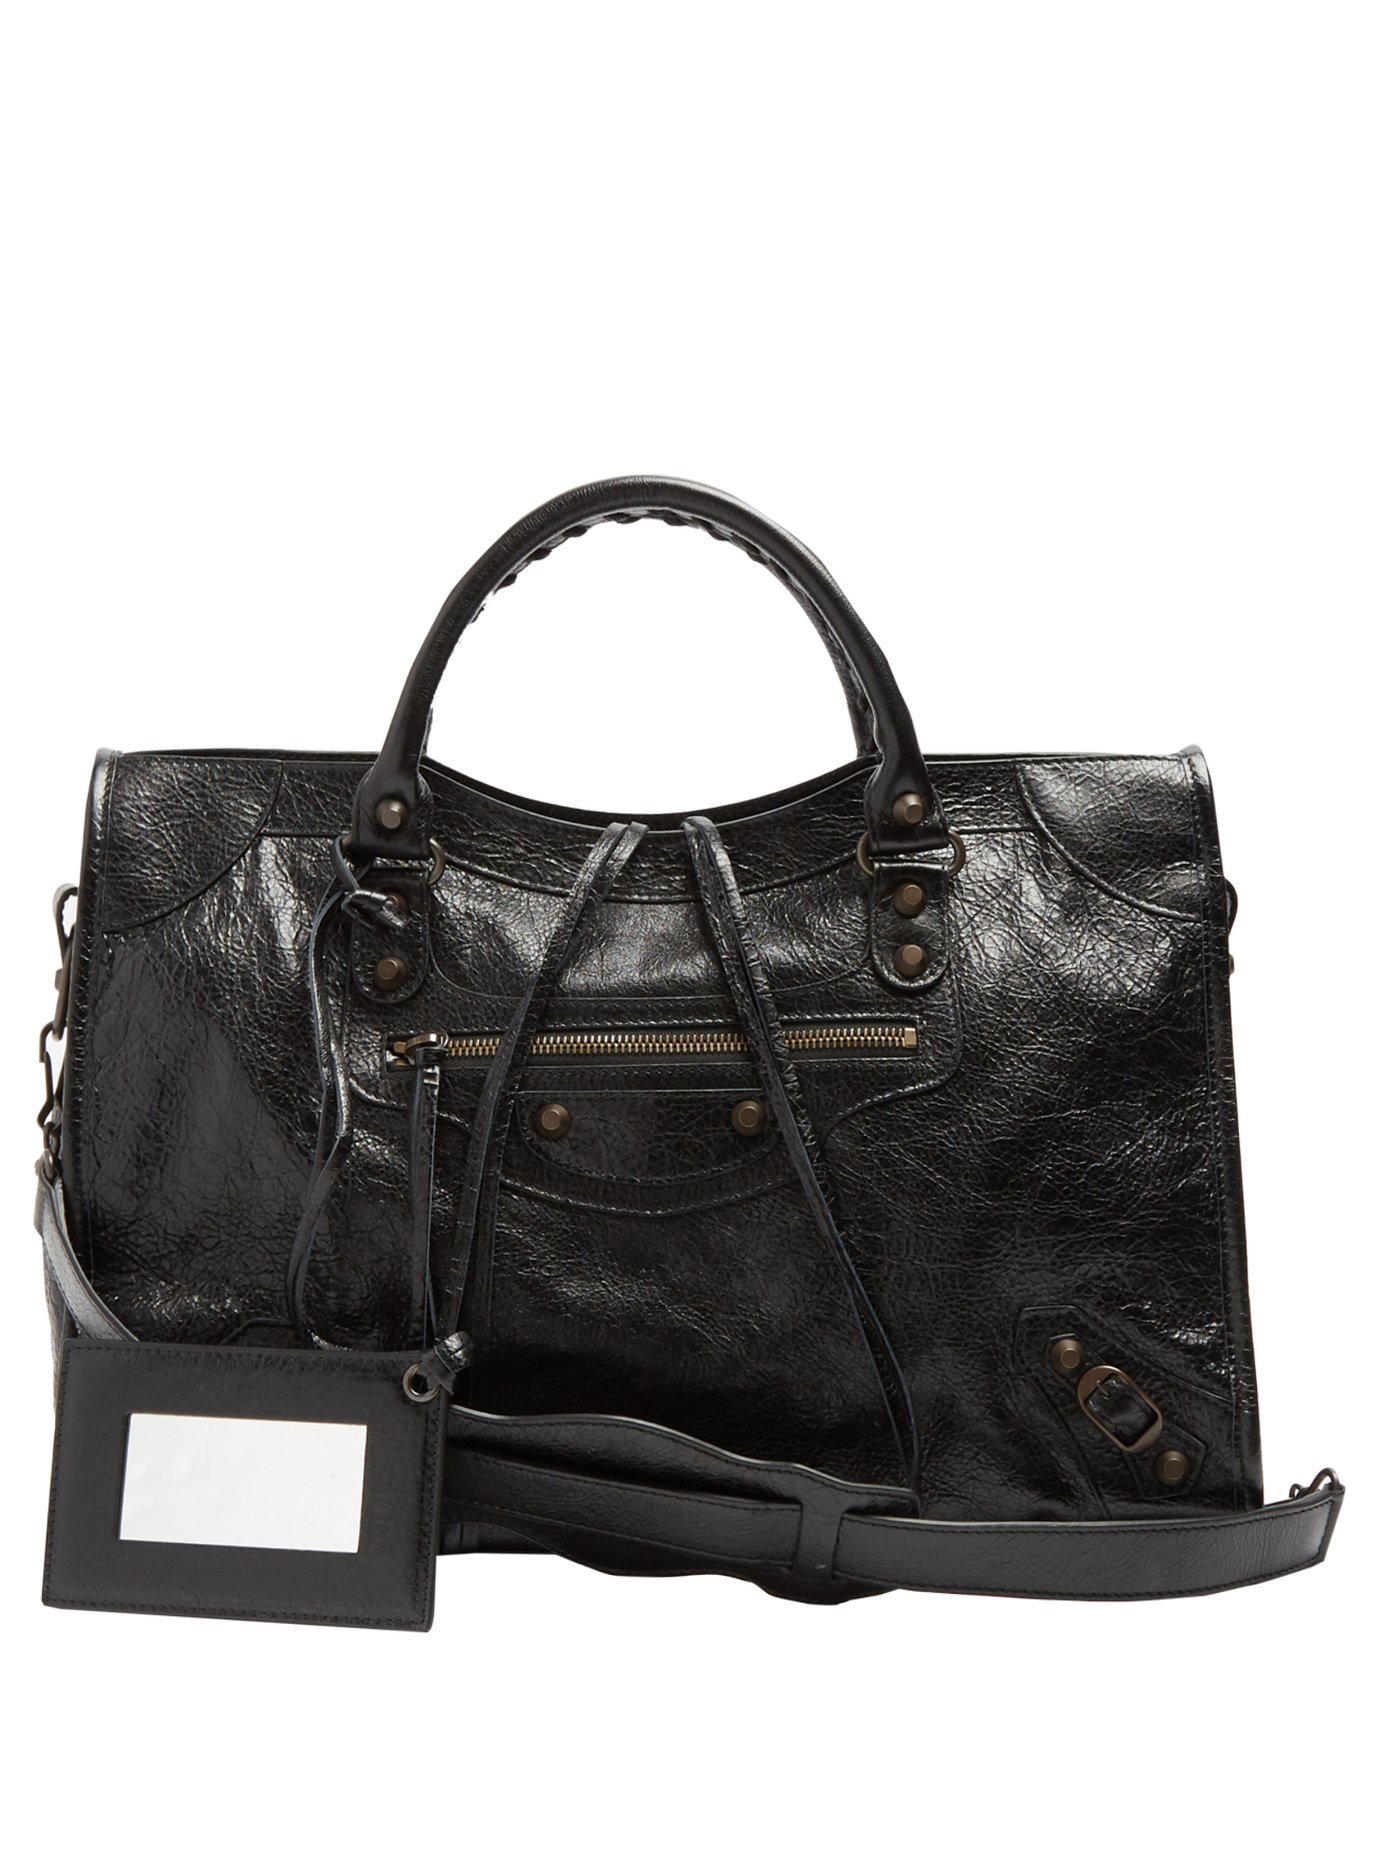 balenciaga classic city leather shoulder bag